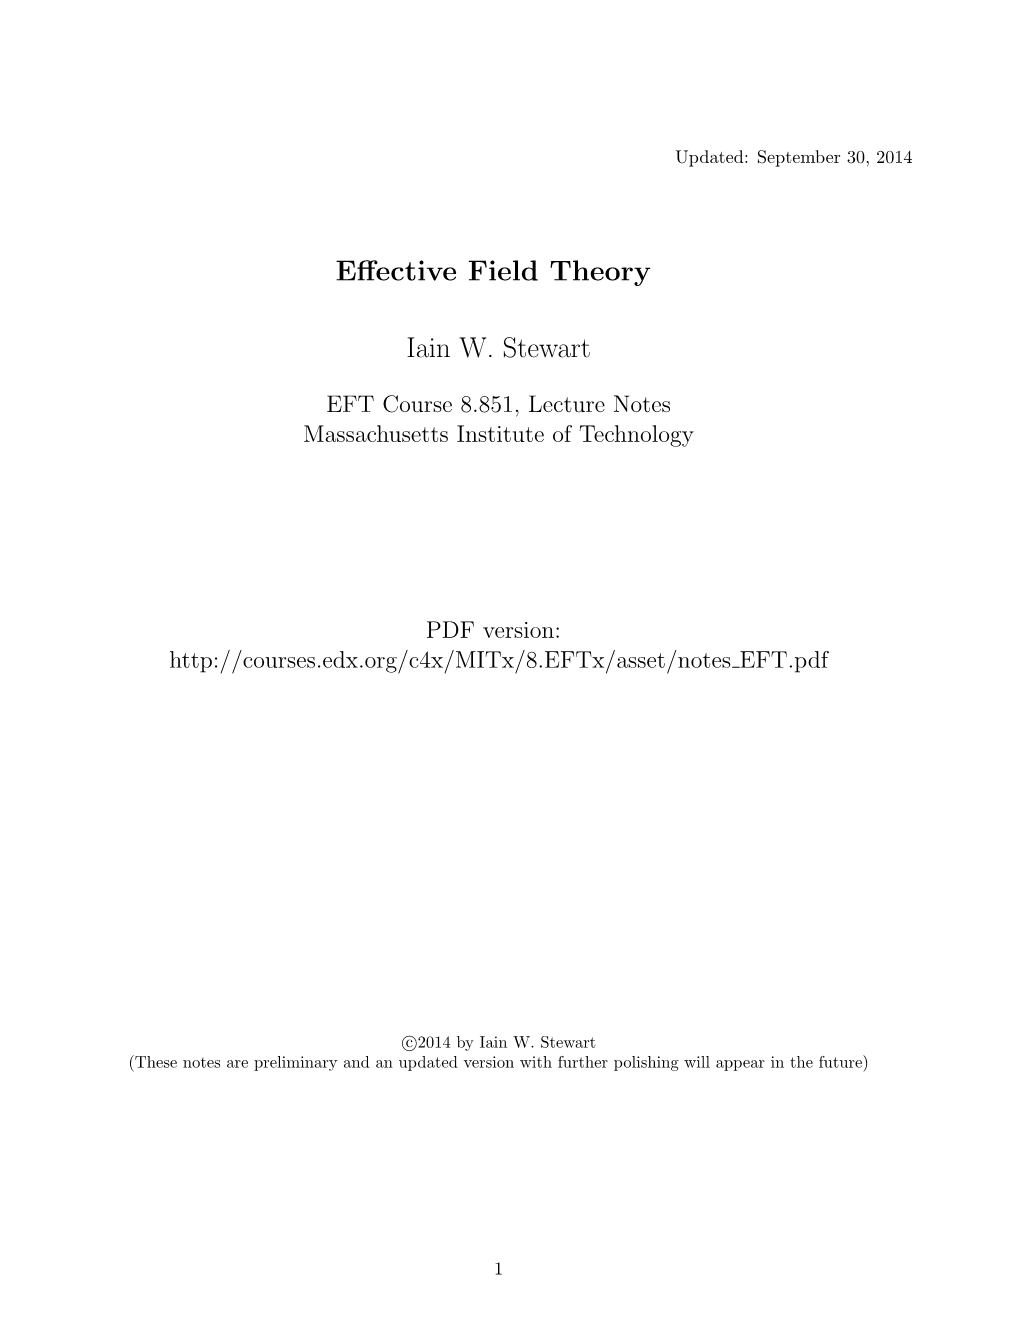 Effective Field Theory Iain W. Stewart